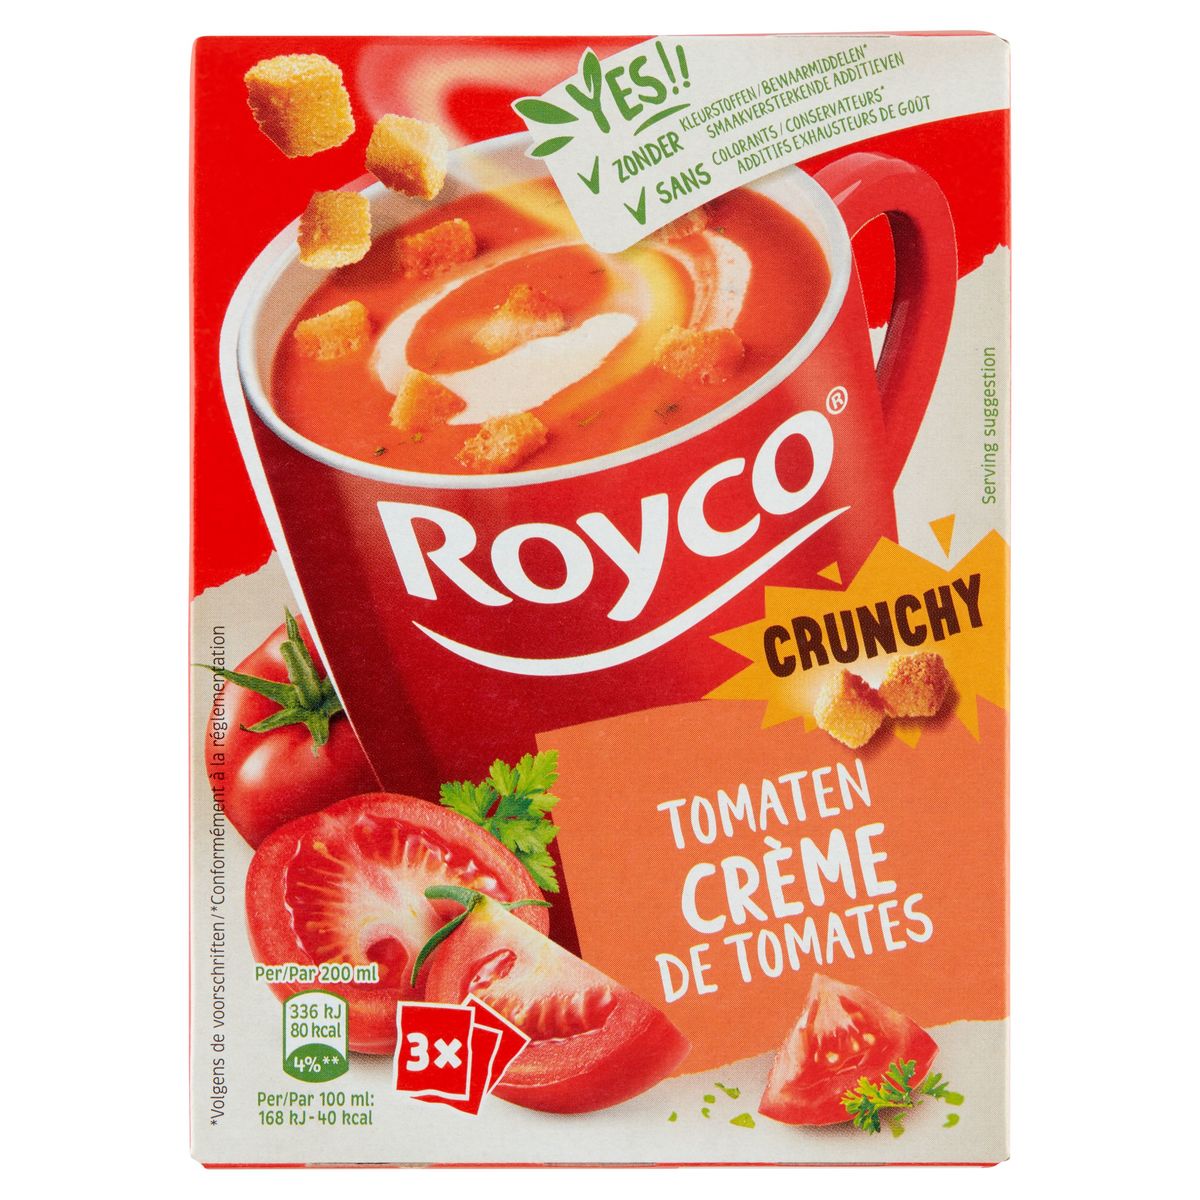 Soupe Royco suprême de tomates et croûtons - boîte de 20 sachets